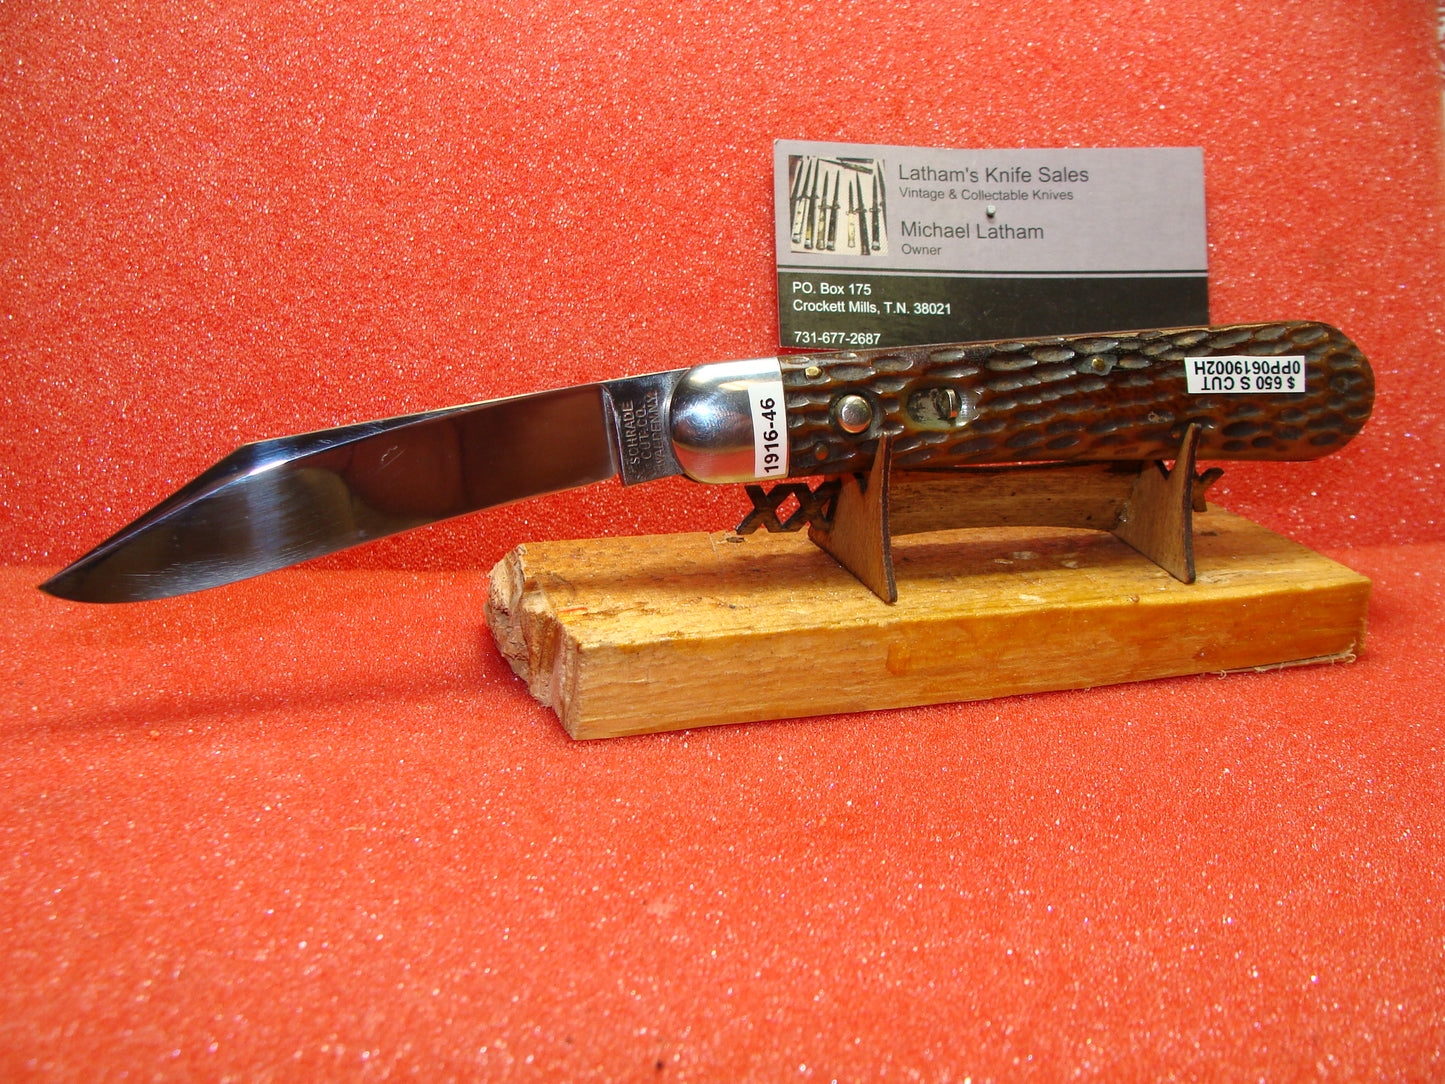 SCHRADE CUTLERY CO. WALDEN N.Y 1916-46 VINTAGE AMERICAN AUTOMATIC KNIFE 4 7/8" HUNTER BROWN BONE HANDLES